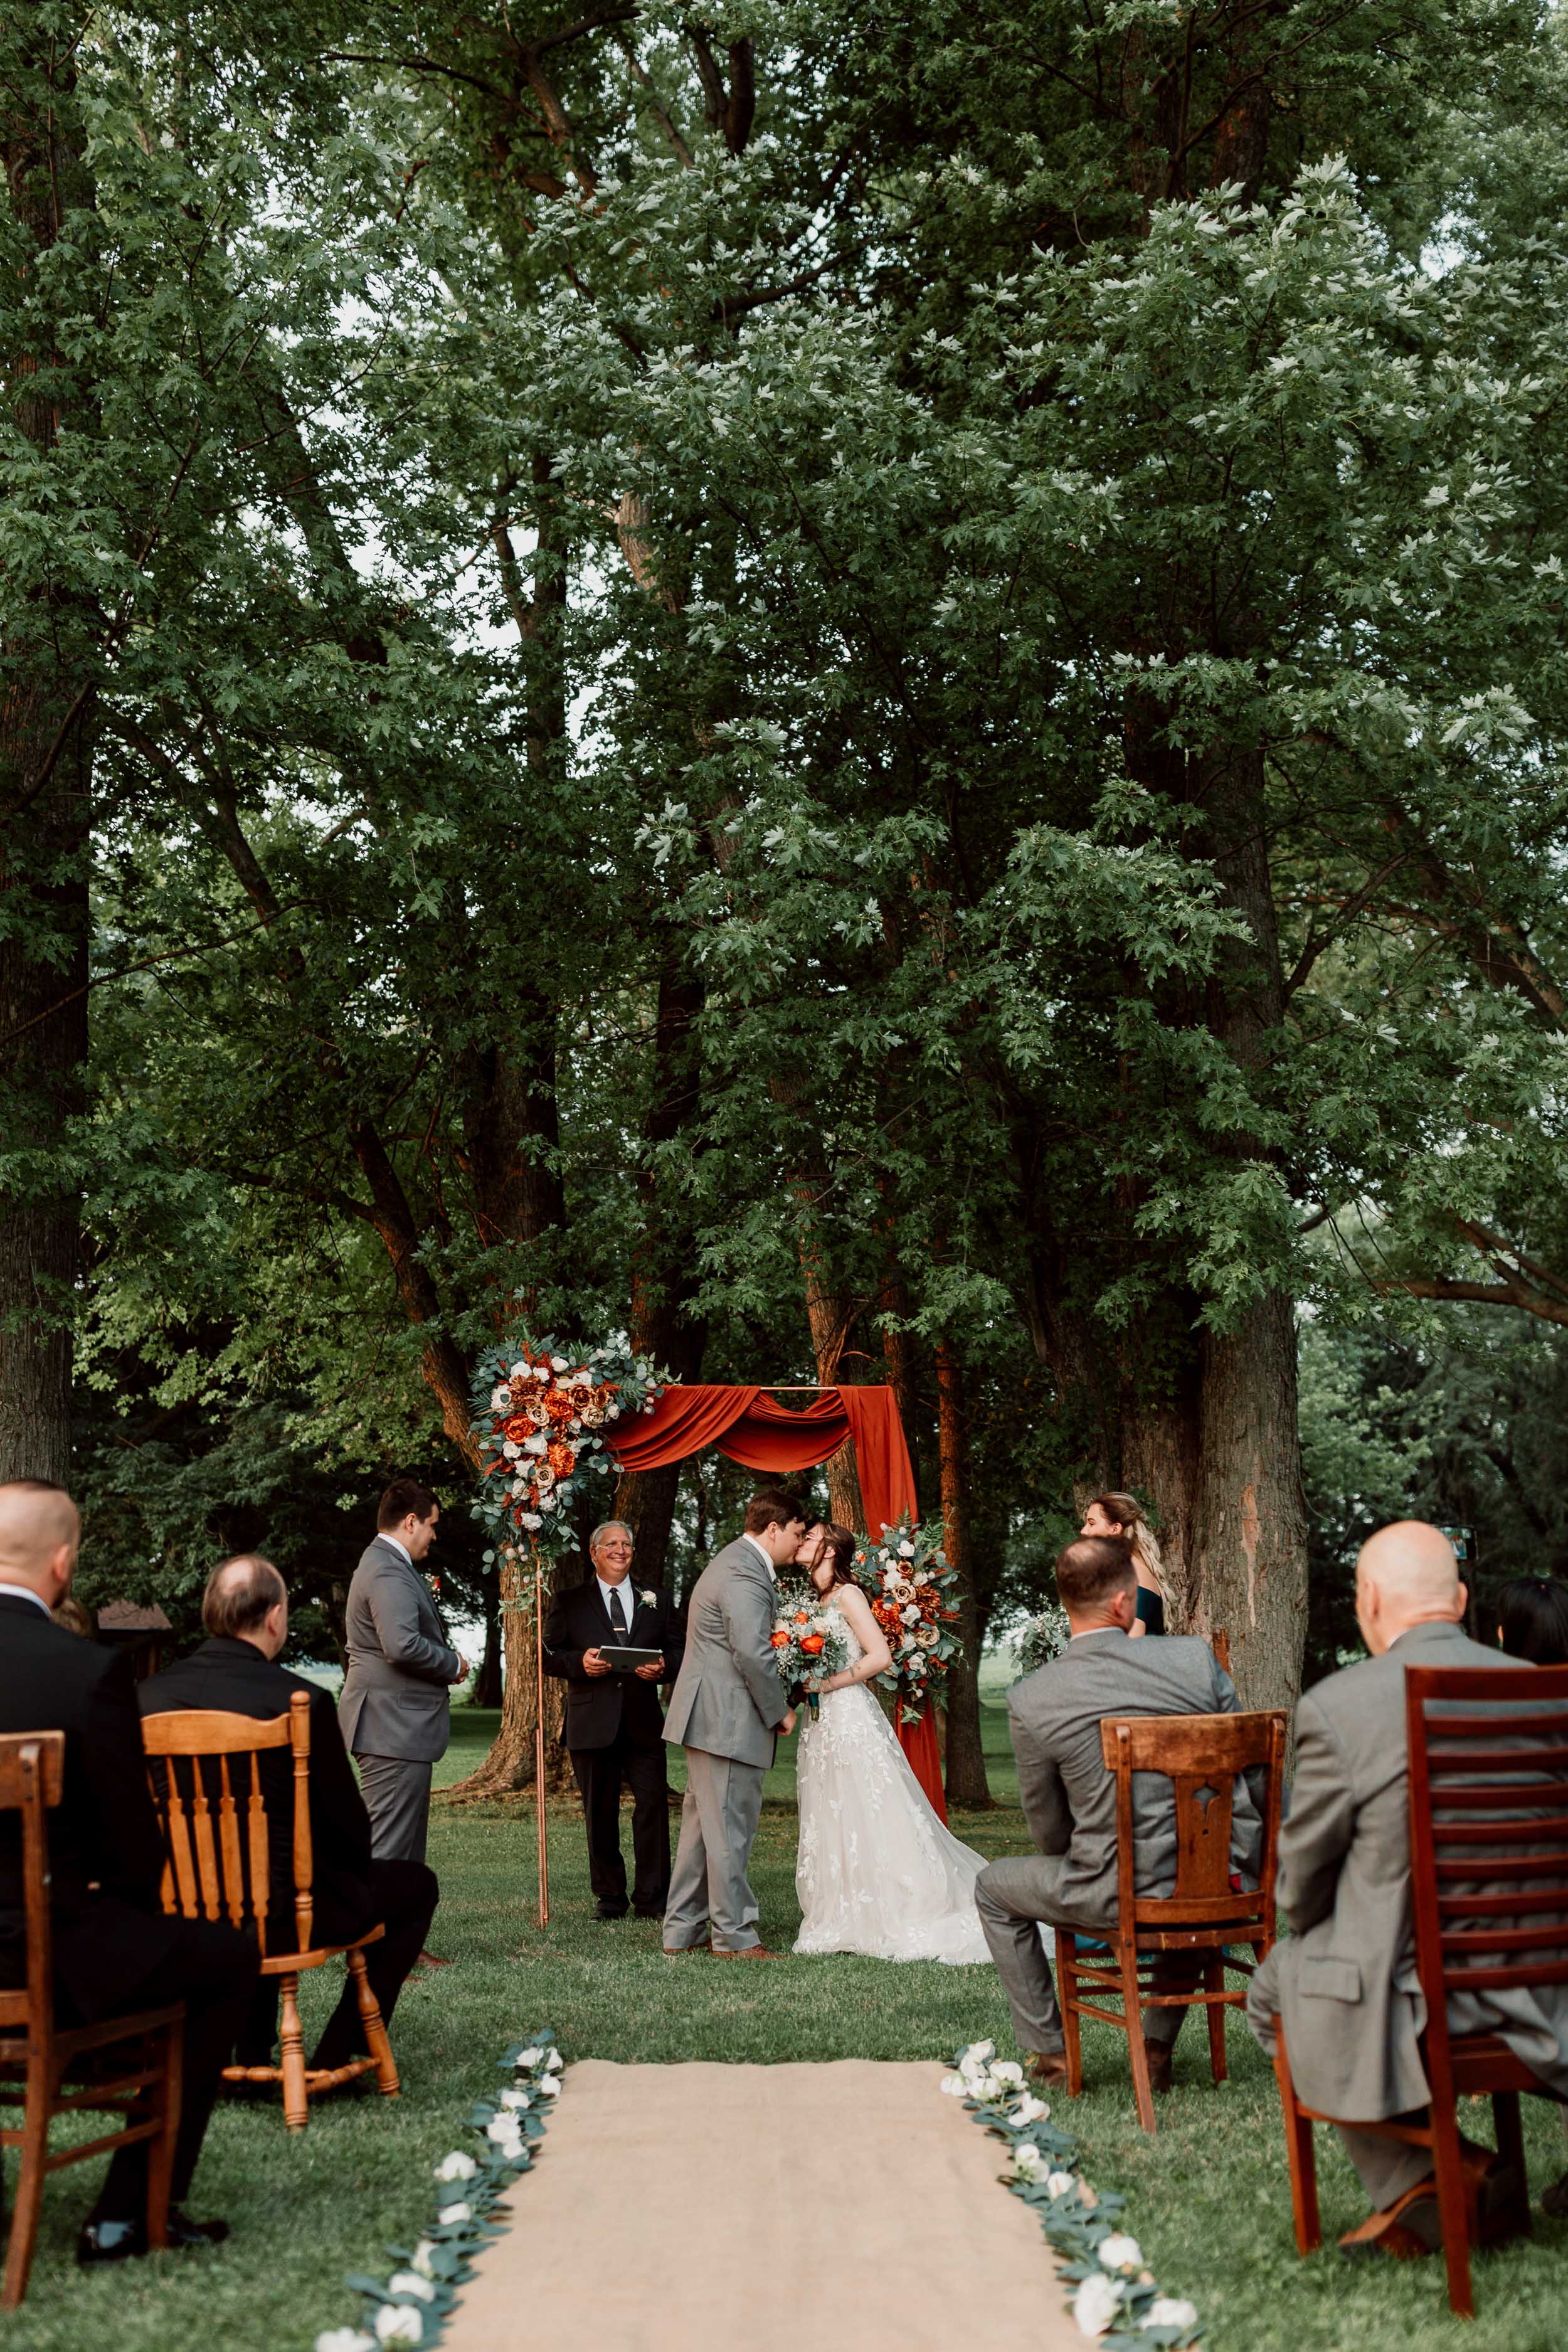 wedding ceremony aisle decorated with flowers | Pecatonica Illinois Backyard Micro Wedding | Central Illinois Micro Weddings
